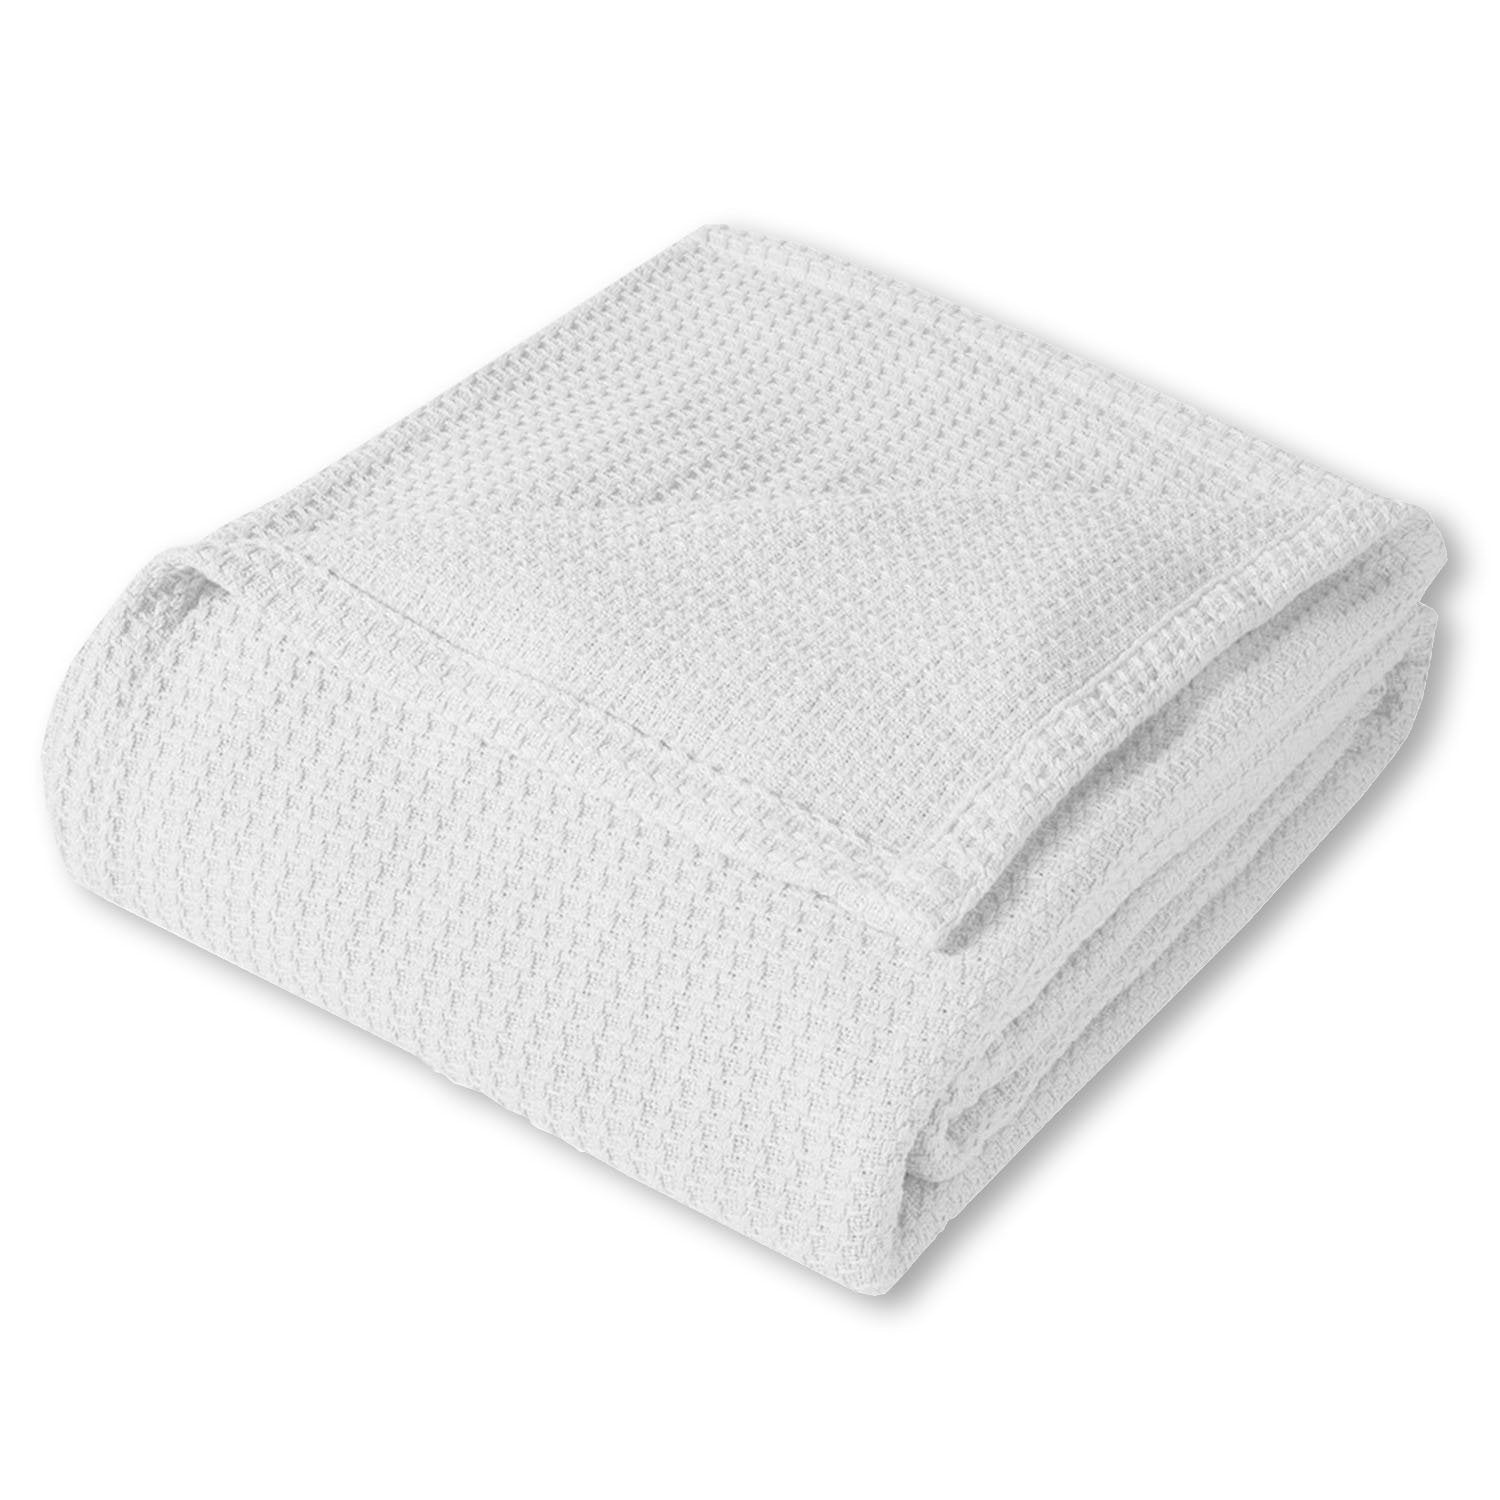 Basket Weave Cotton Blanket White - Folded